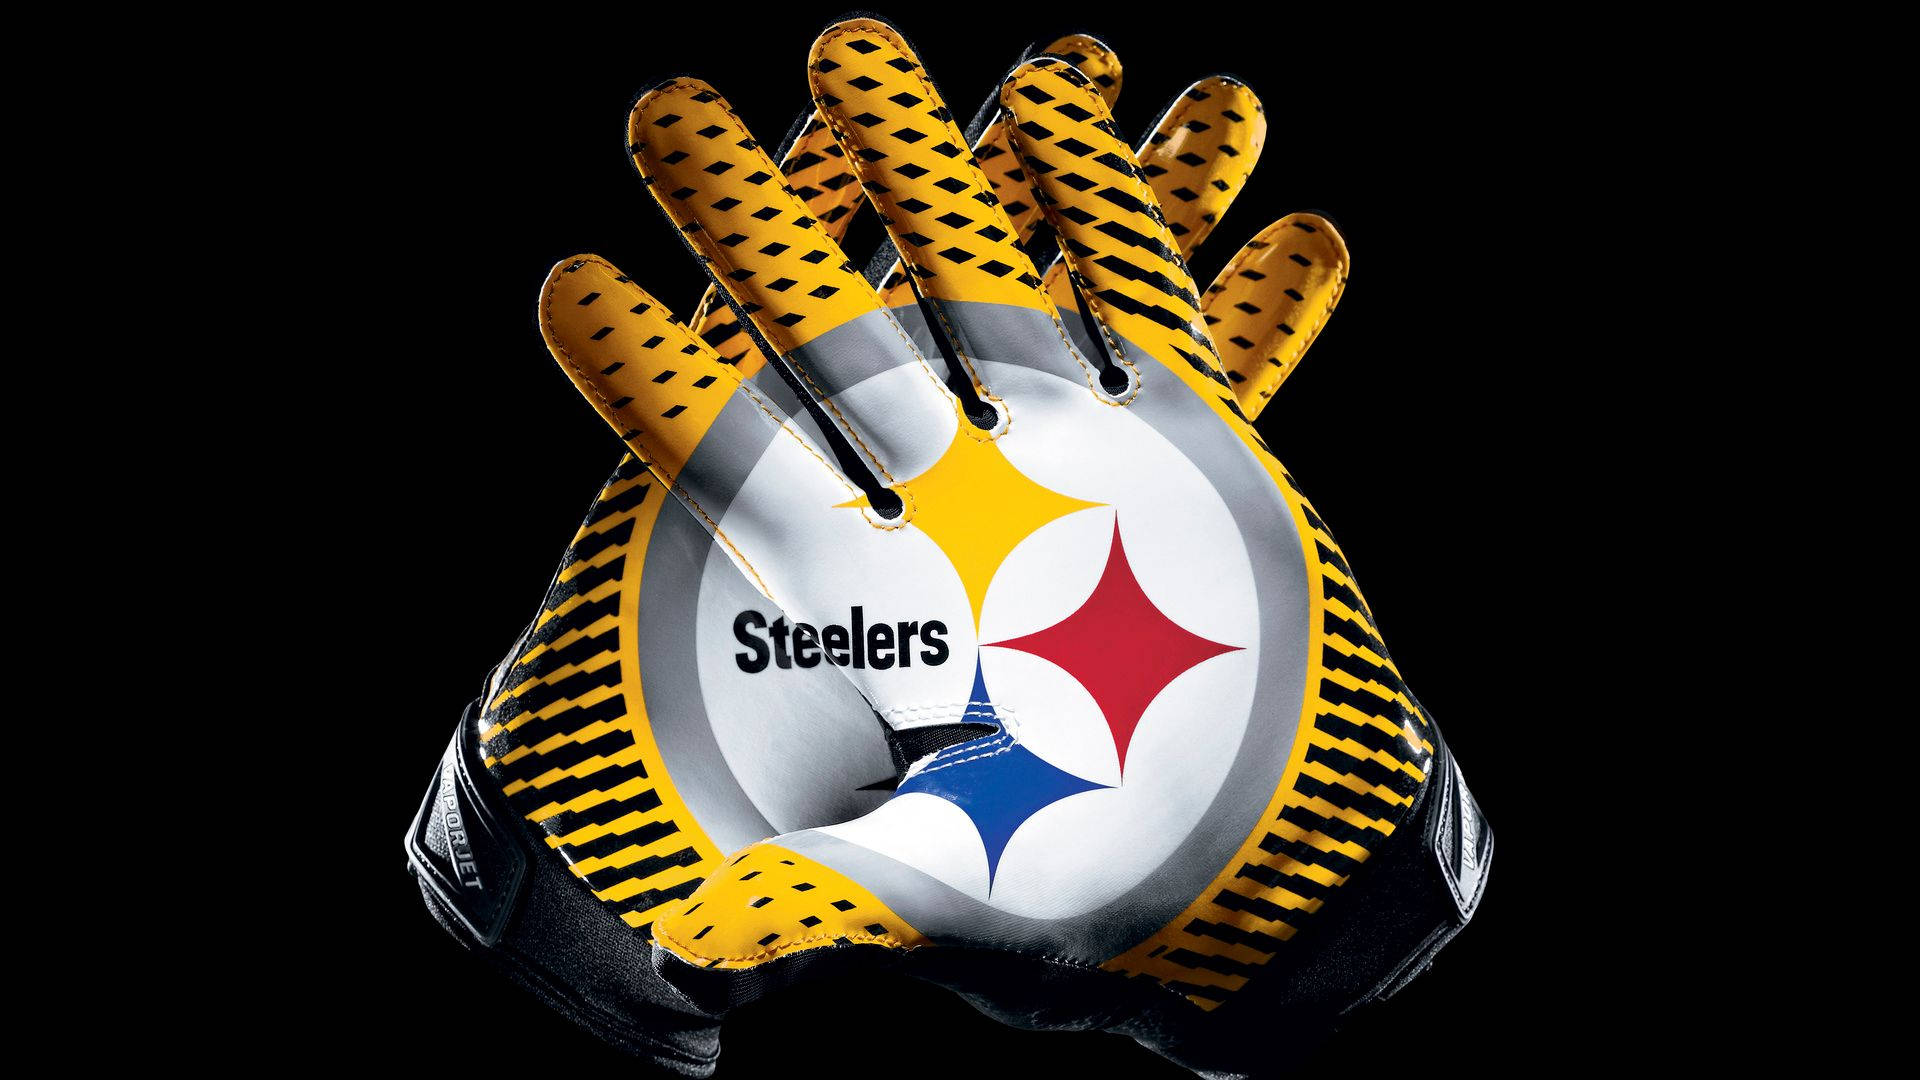 Steelers Pictures Wallpaper